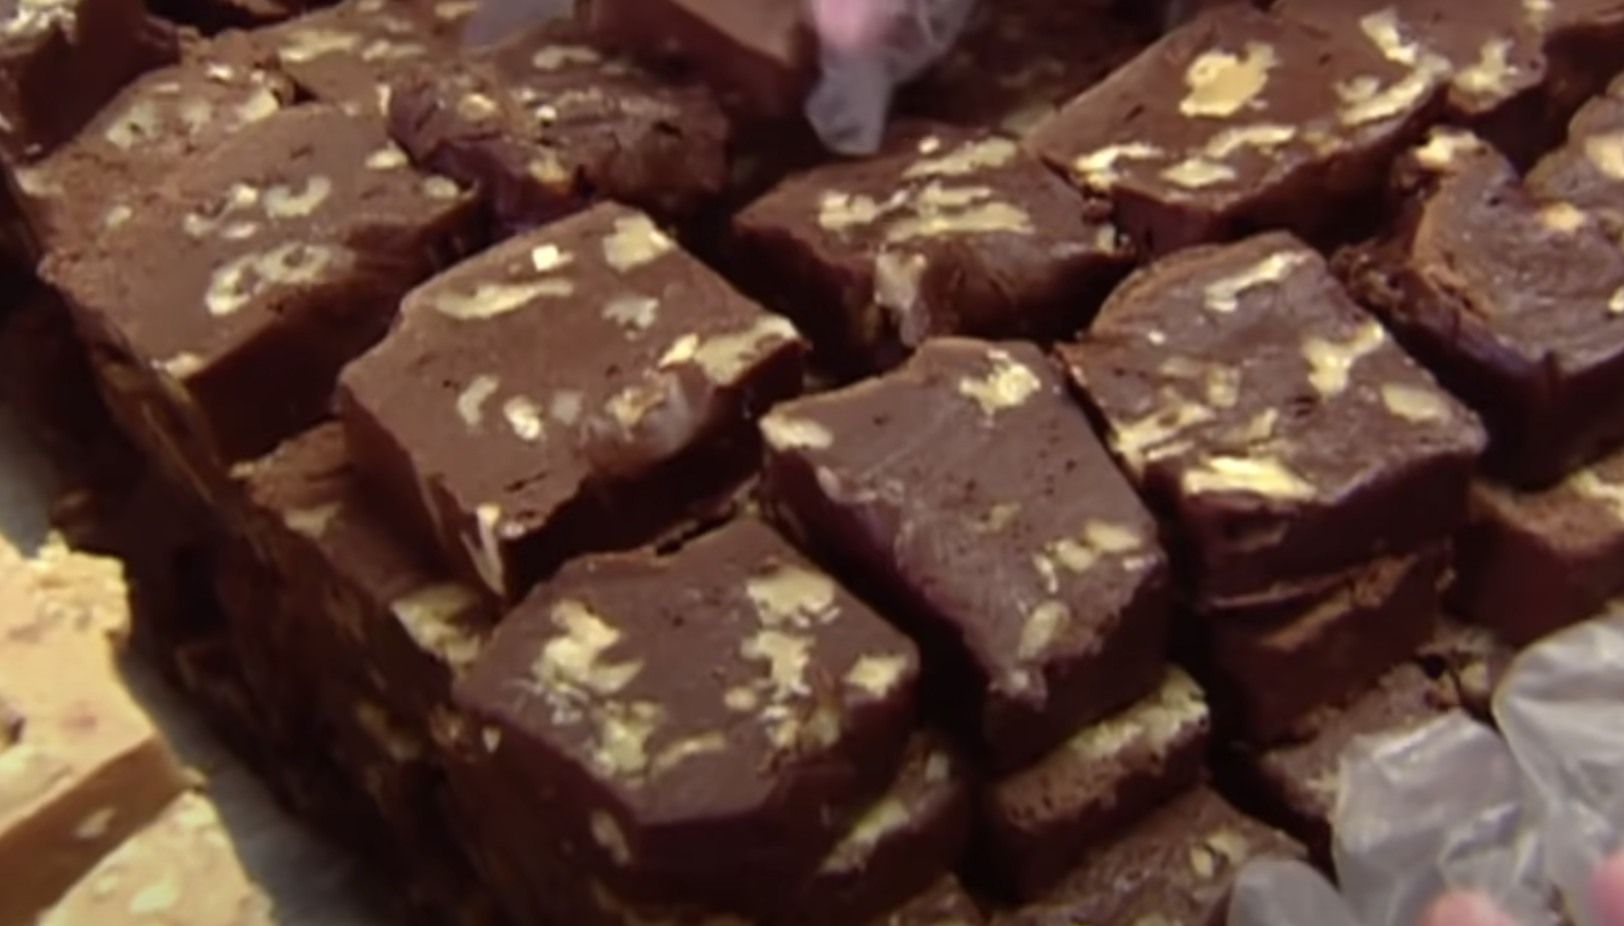 A tray of chocolate fudge